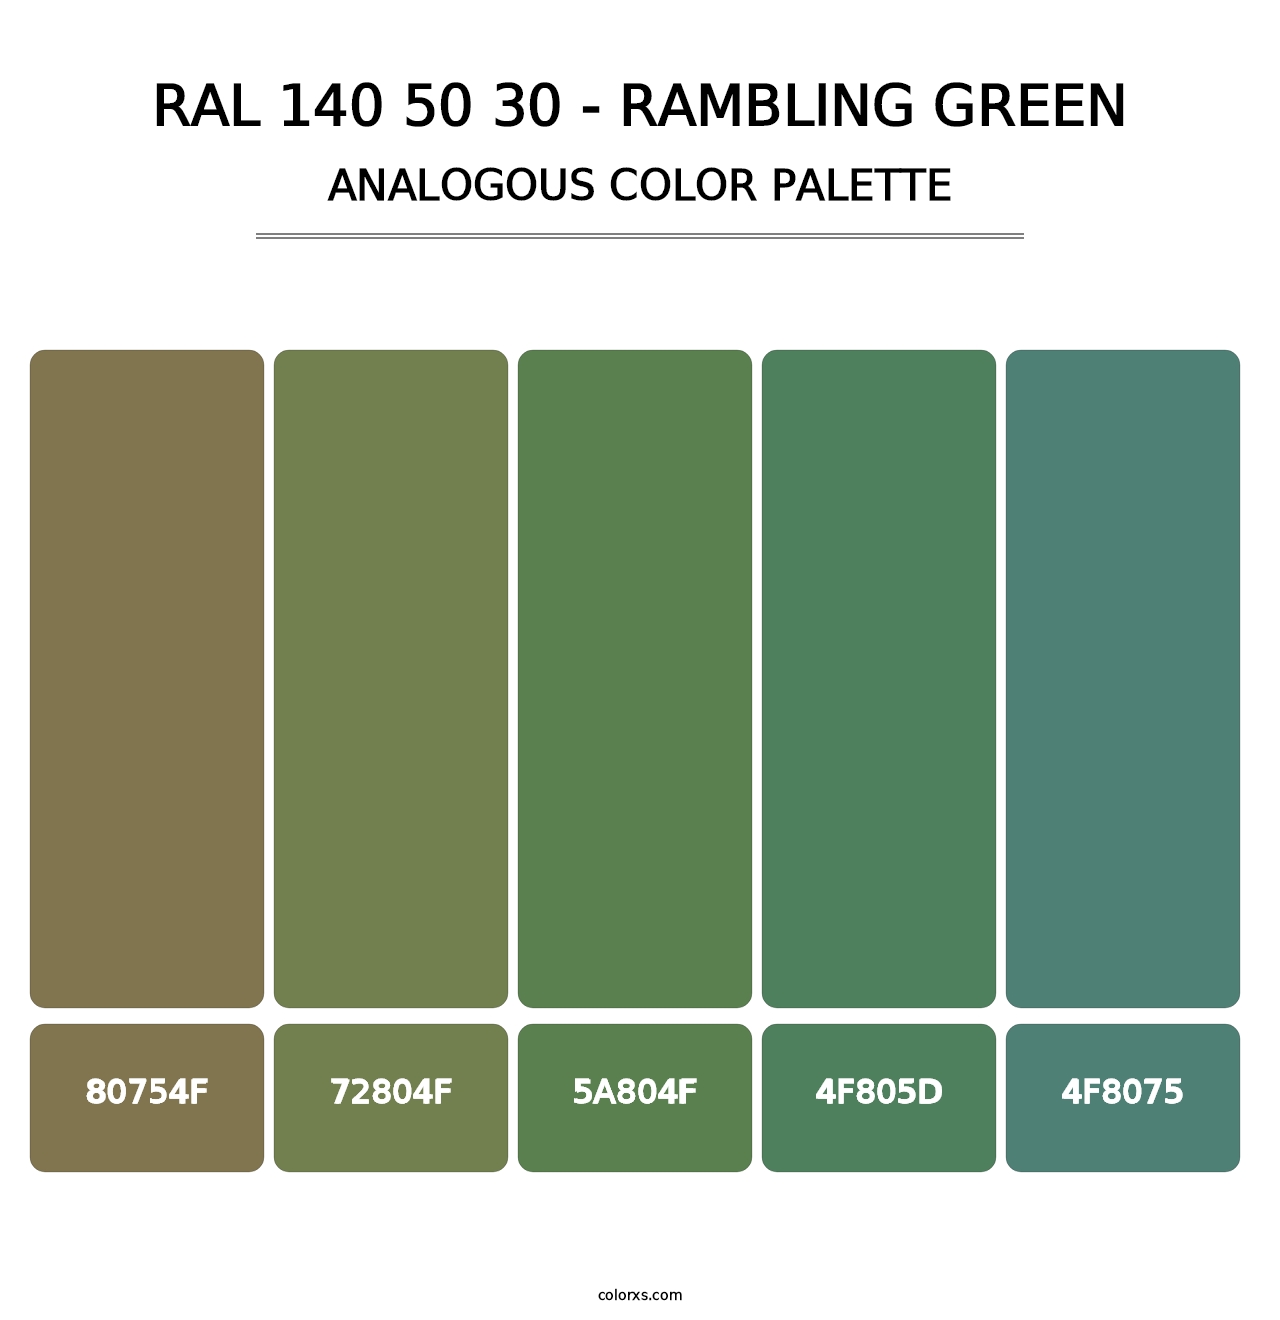 RAL 140 50 30 - Rambling Green - Analogous Color Palette